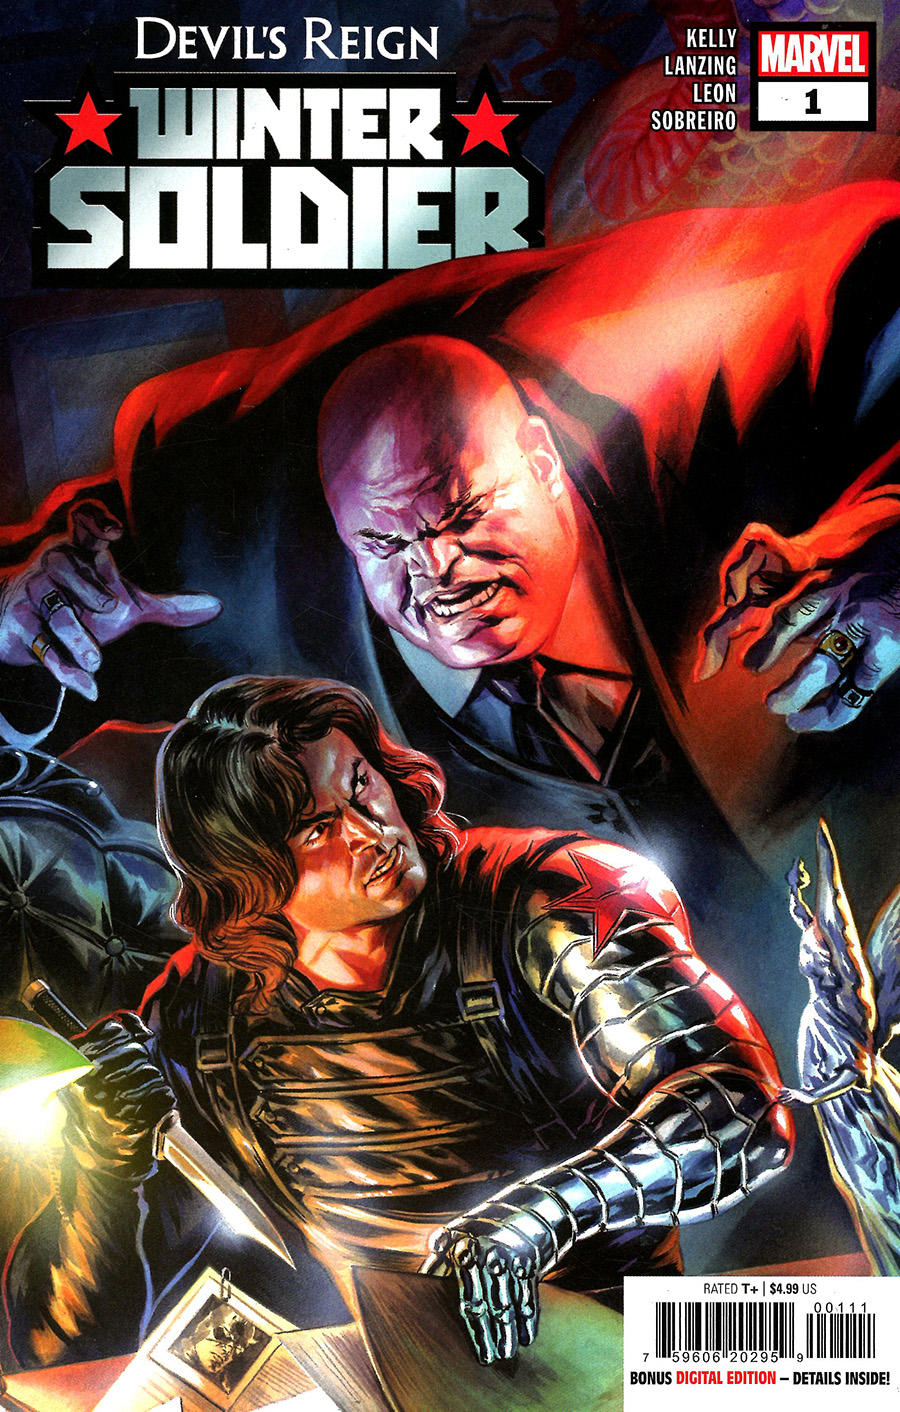 Devils Reign Winter Soldier #1 (One Shot) Cover A Regular Felipe Massafera Cover